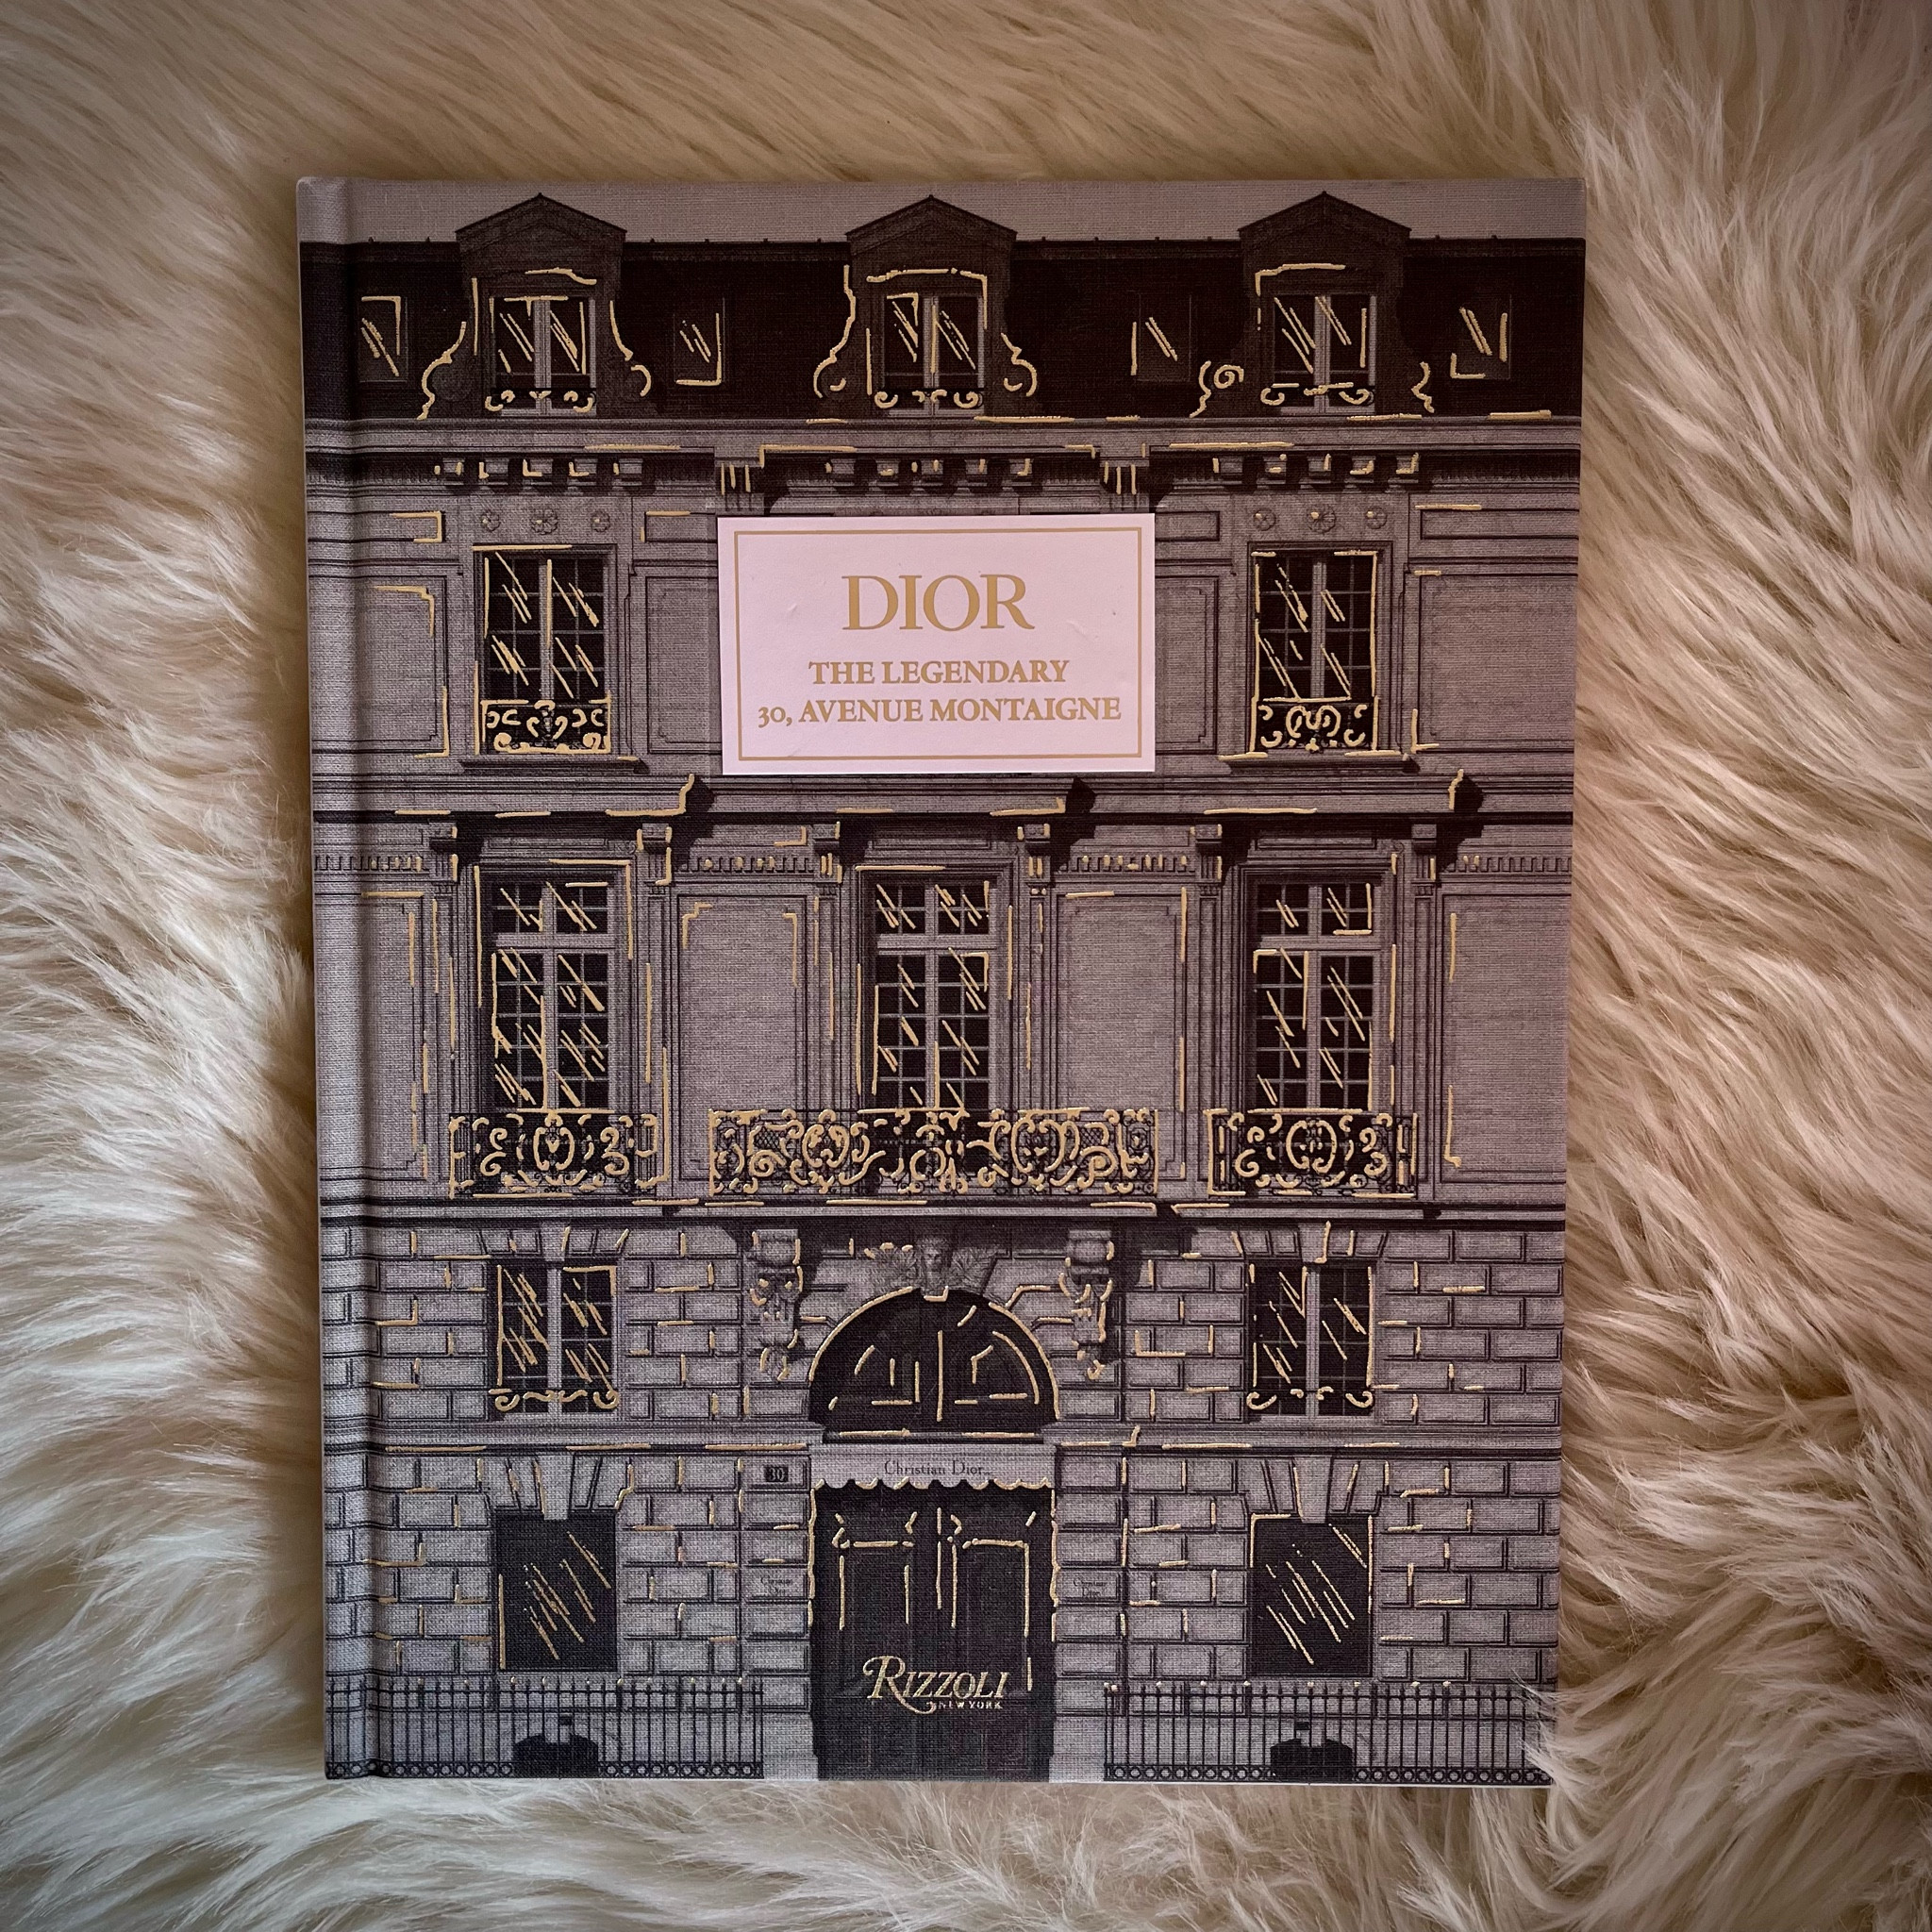  Dior: The Legendary 30, Avenue Montaigne